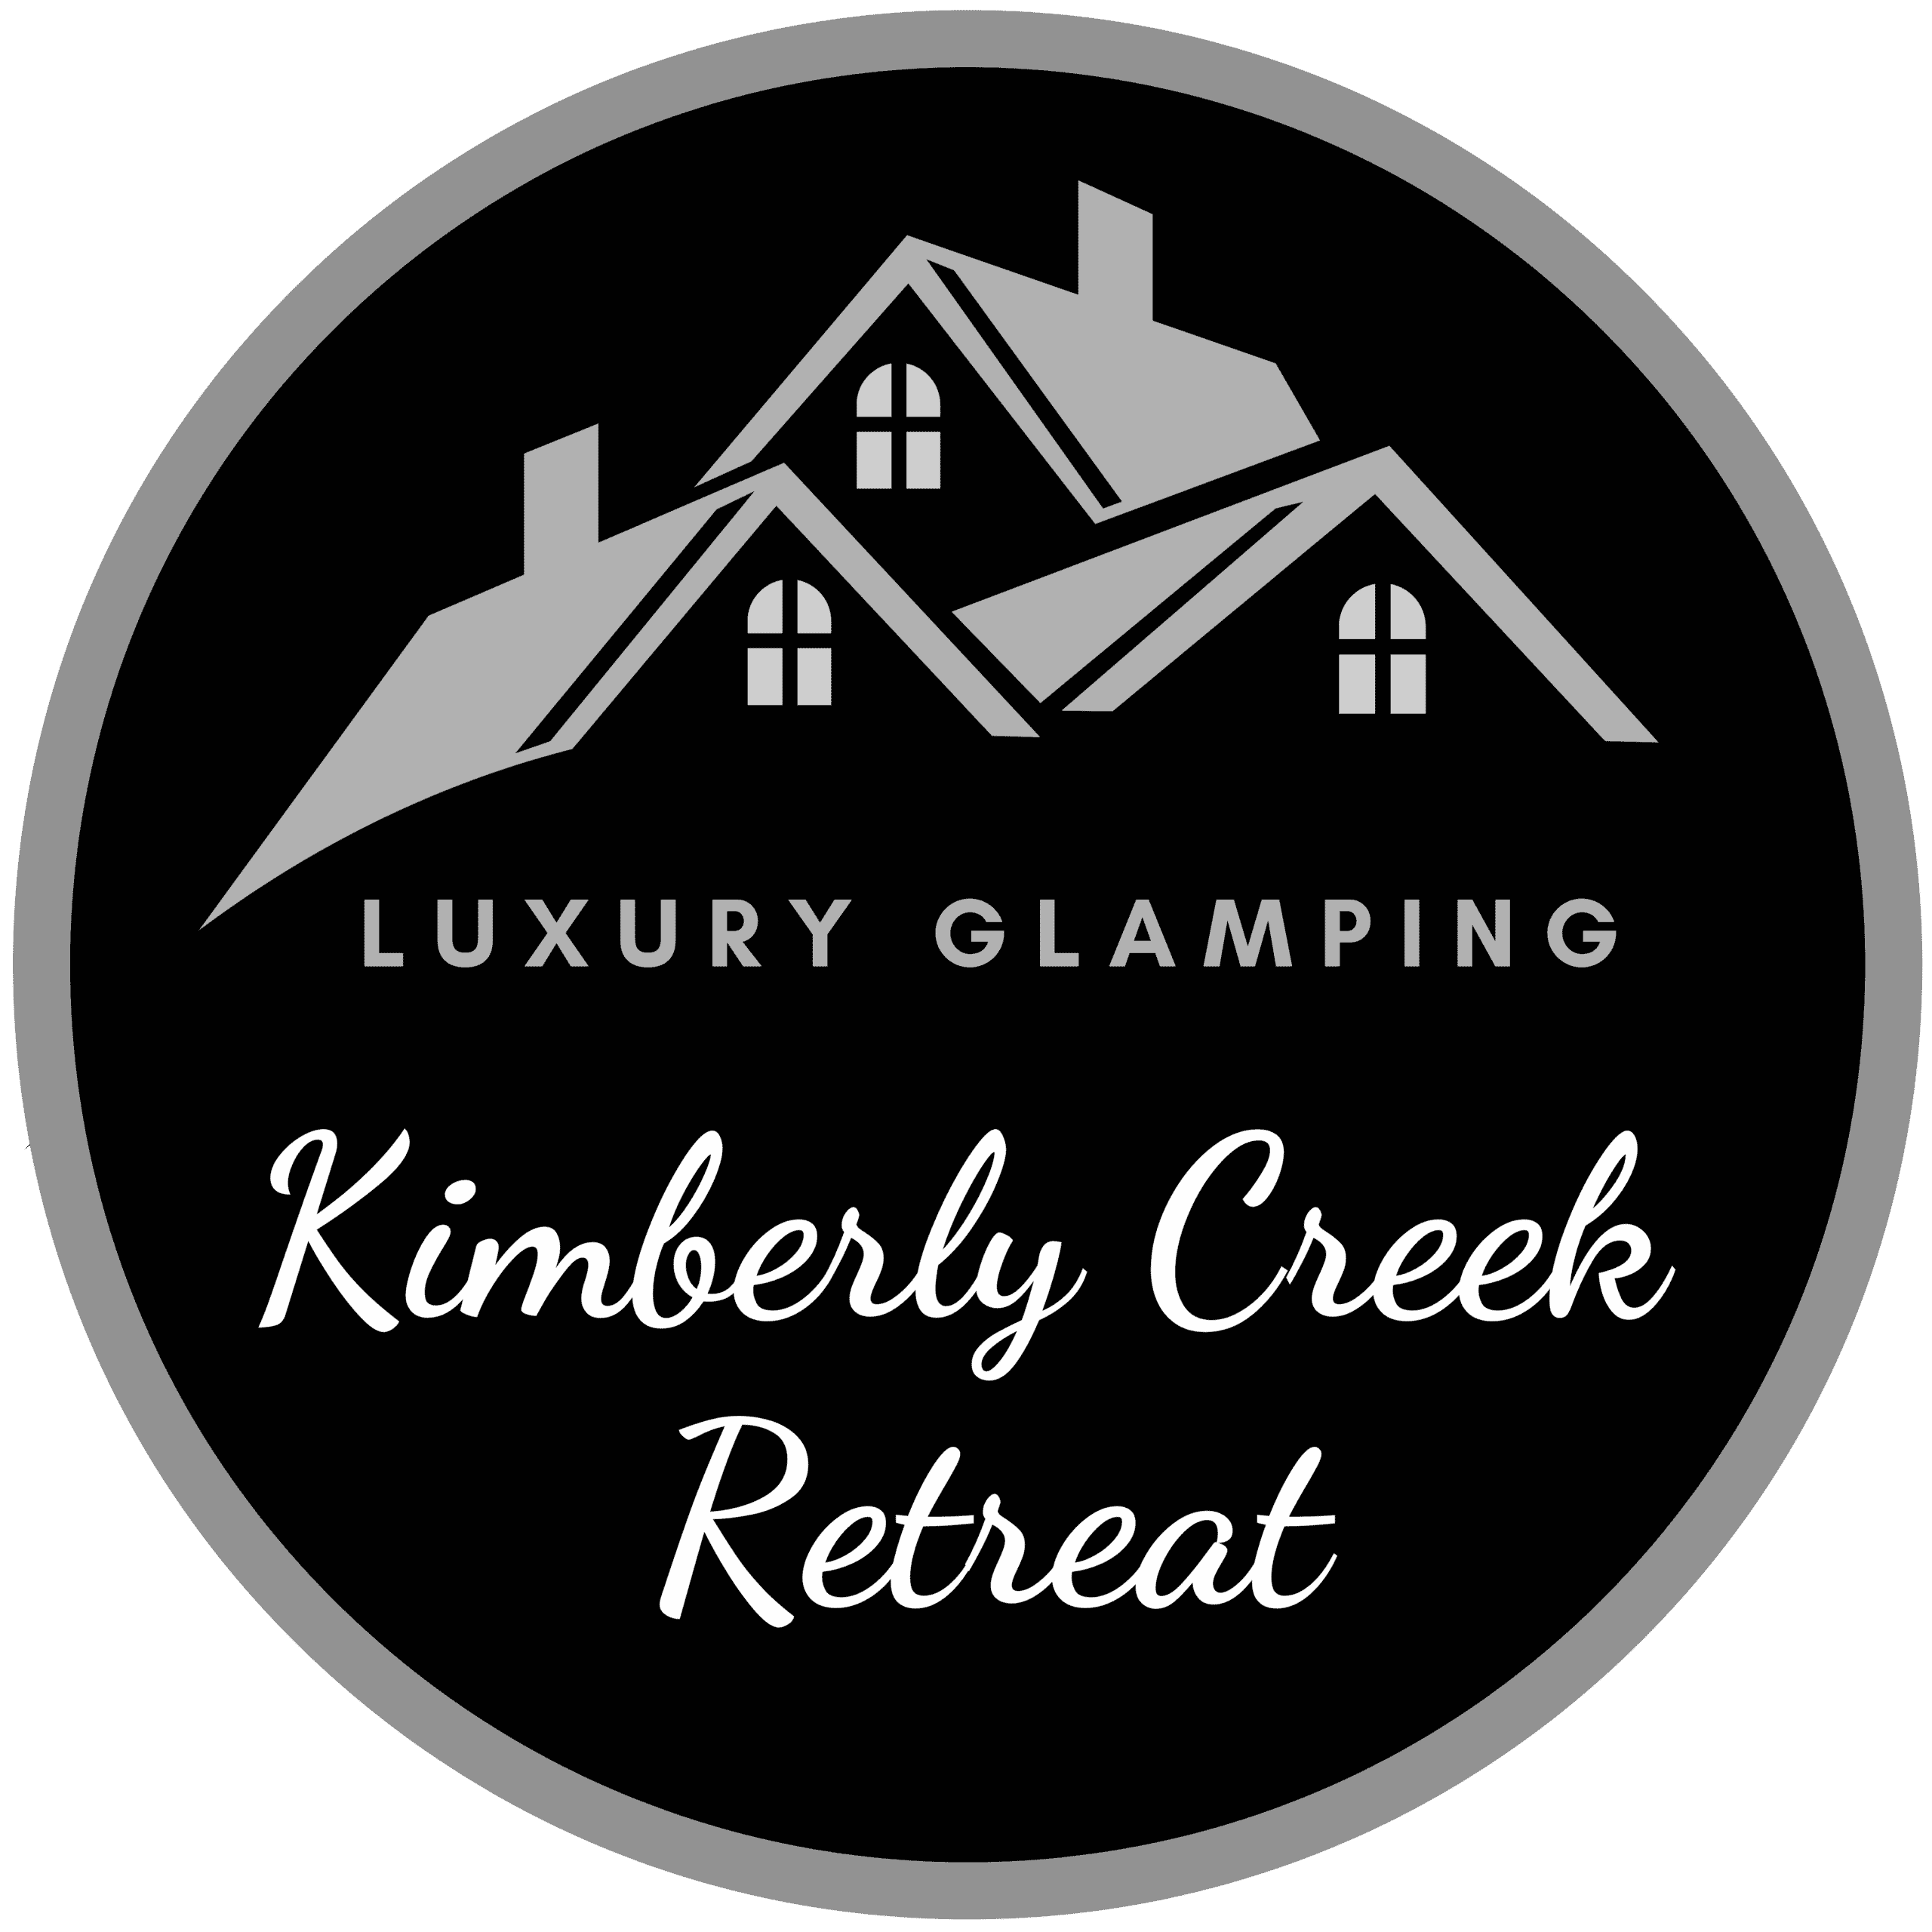 Kimberly Creek